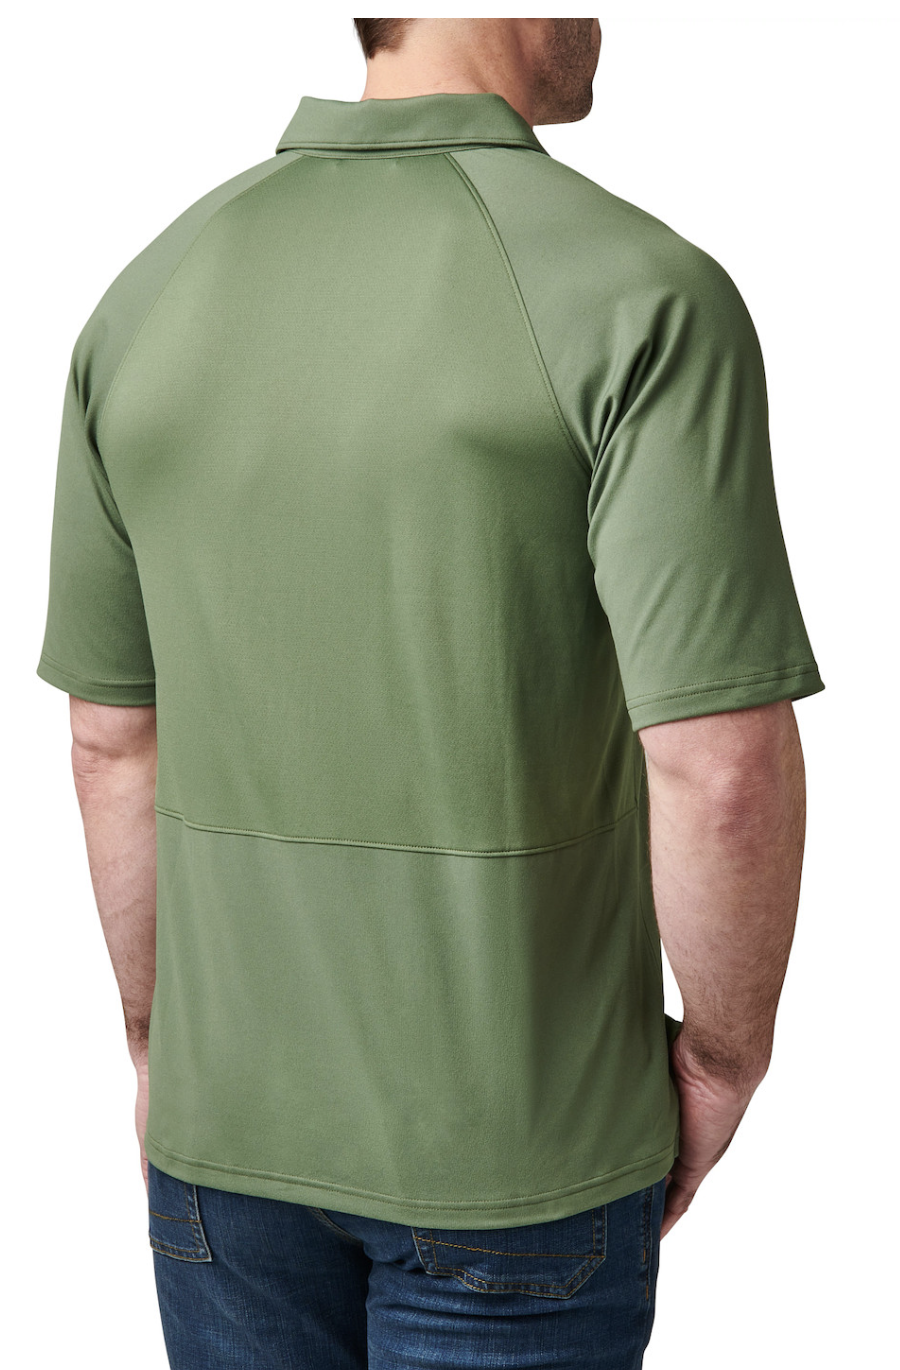 5.11 - Elite Short Sleeve Polo - Greenzone (368)